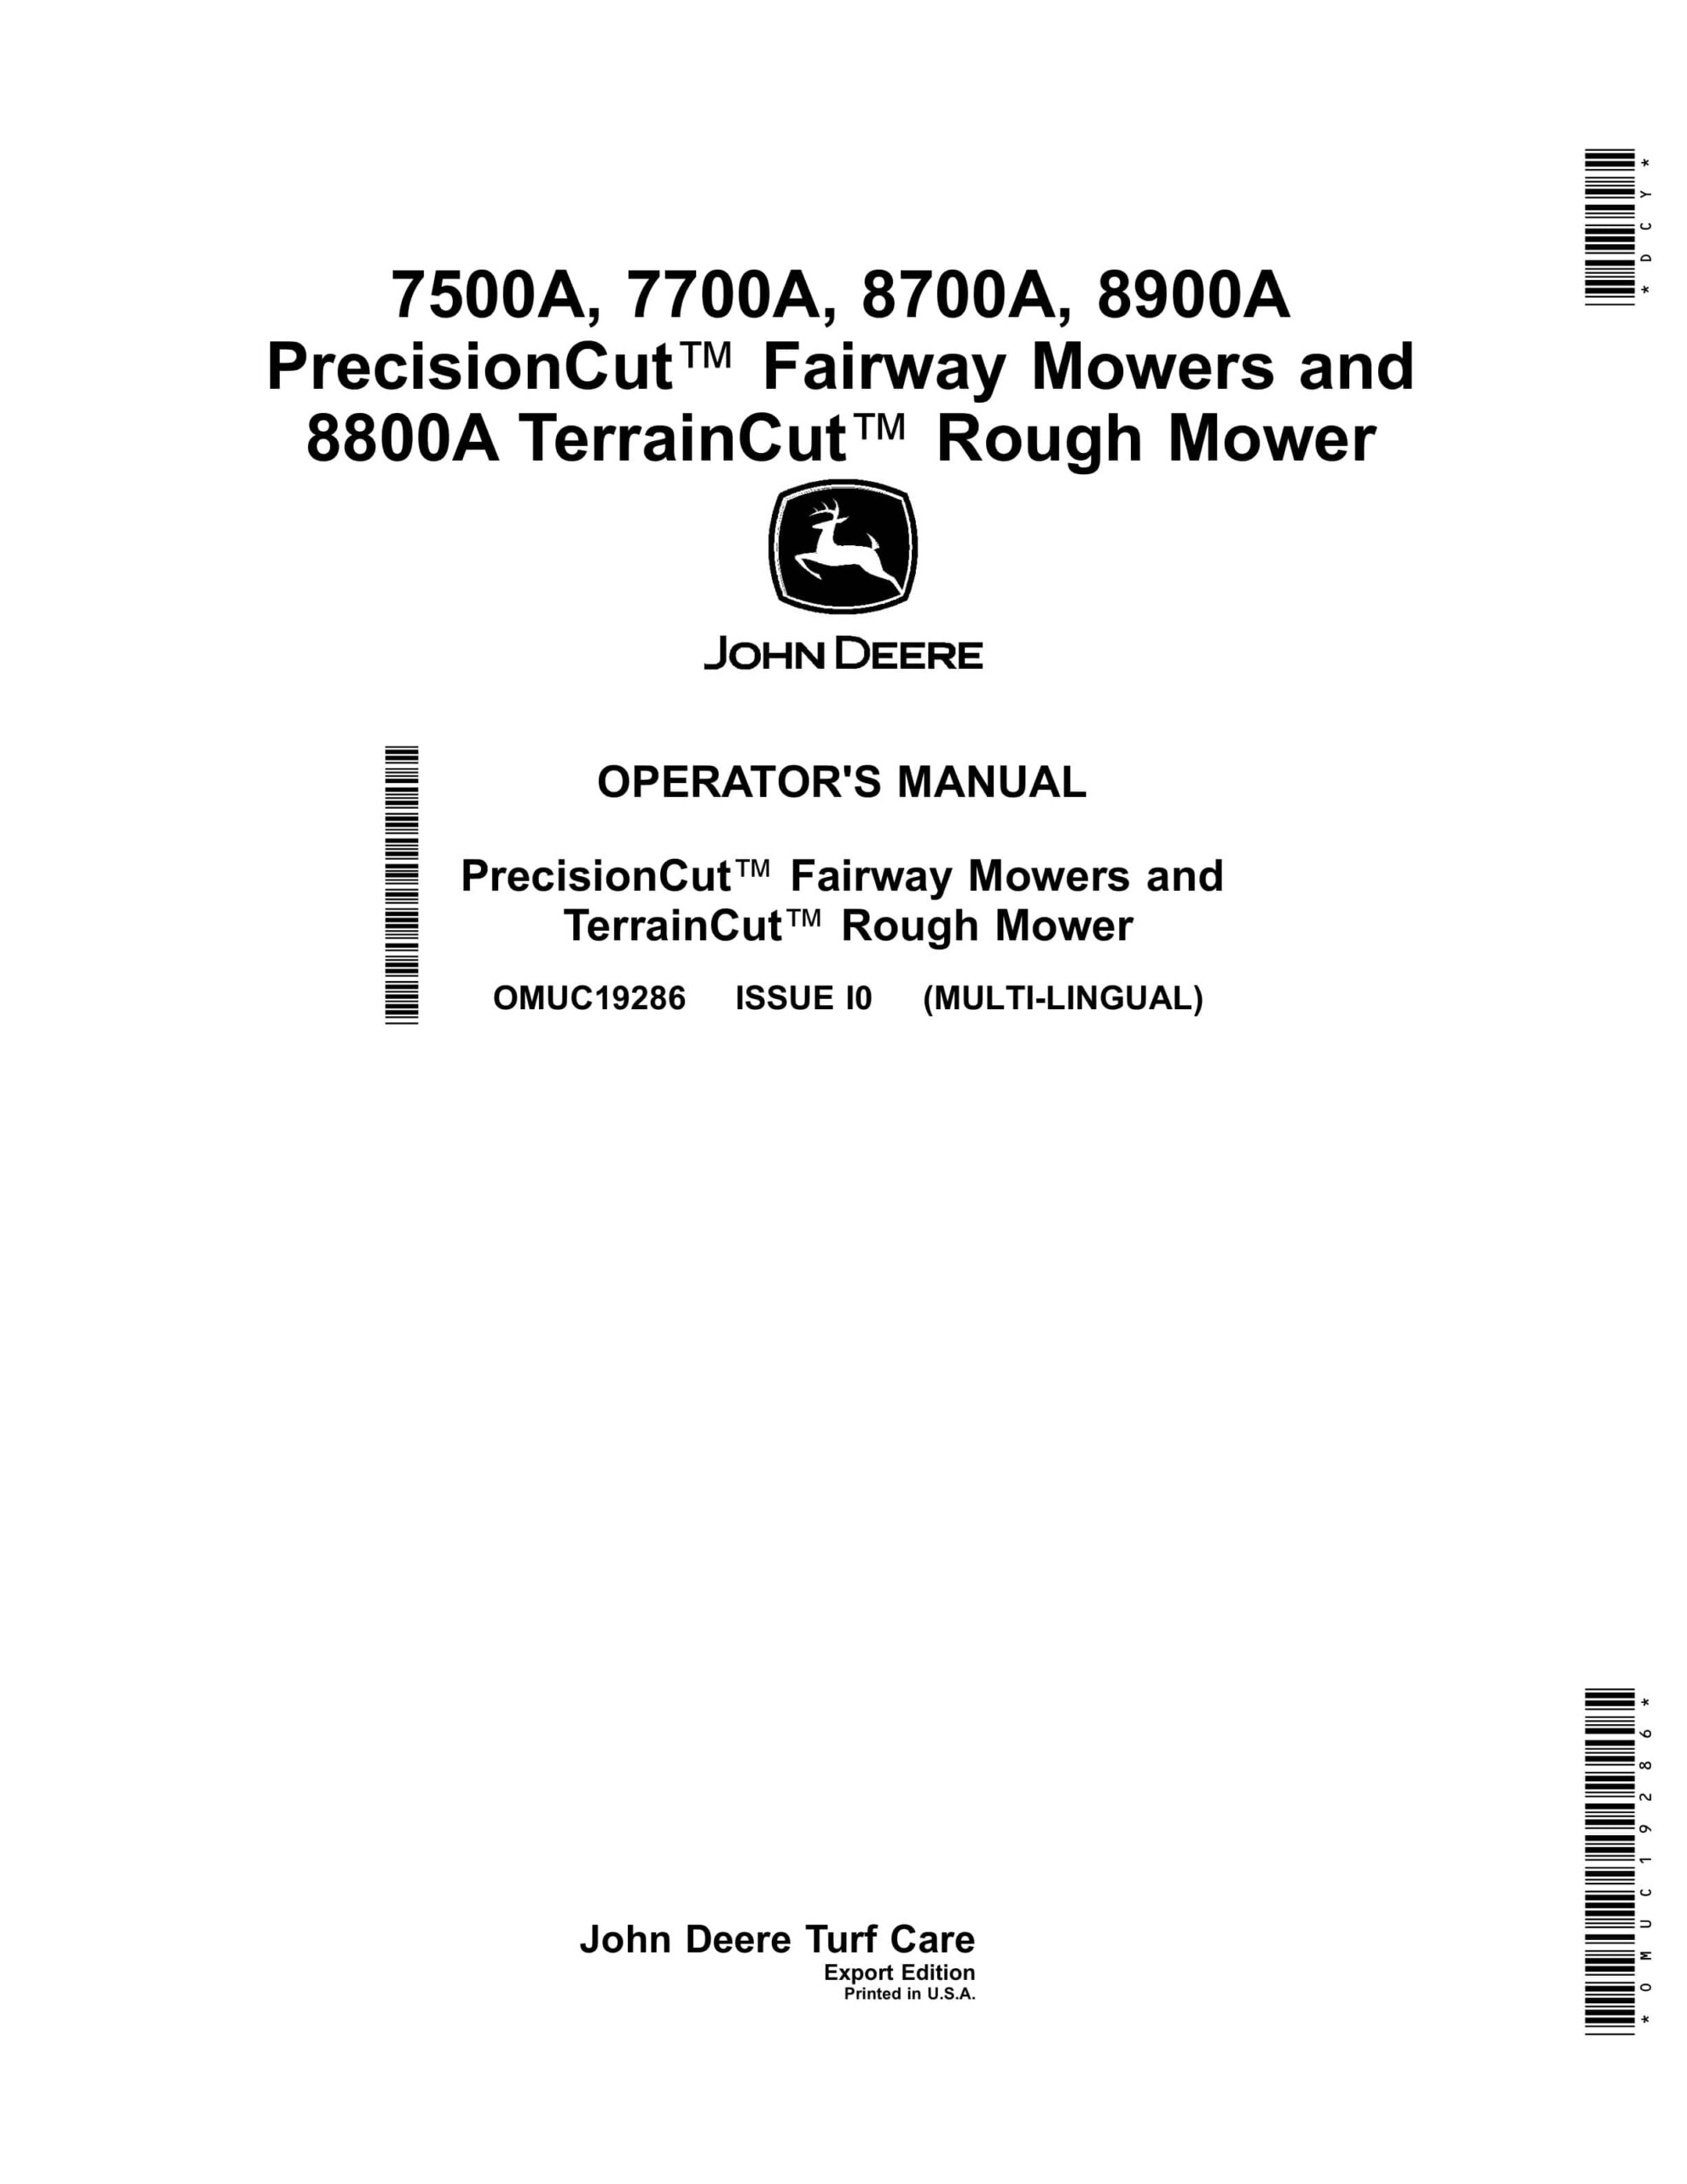 John Deere 7500A, 7700A, 8700A, 8900A PrecisionCut Fairway Mowers and 8800A TerrainCut Rough Mower Operator Manual OMUC19286-1